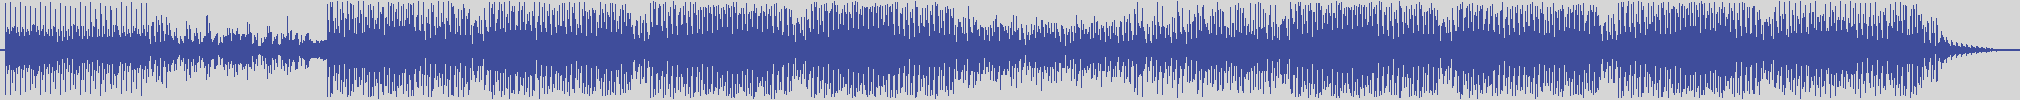 nf_boyz_records [NFY060] Goldeep - Another Life [Ocen Mix] audio wave form